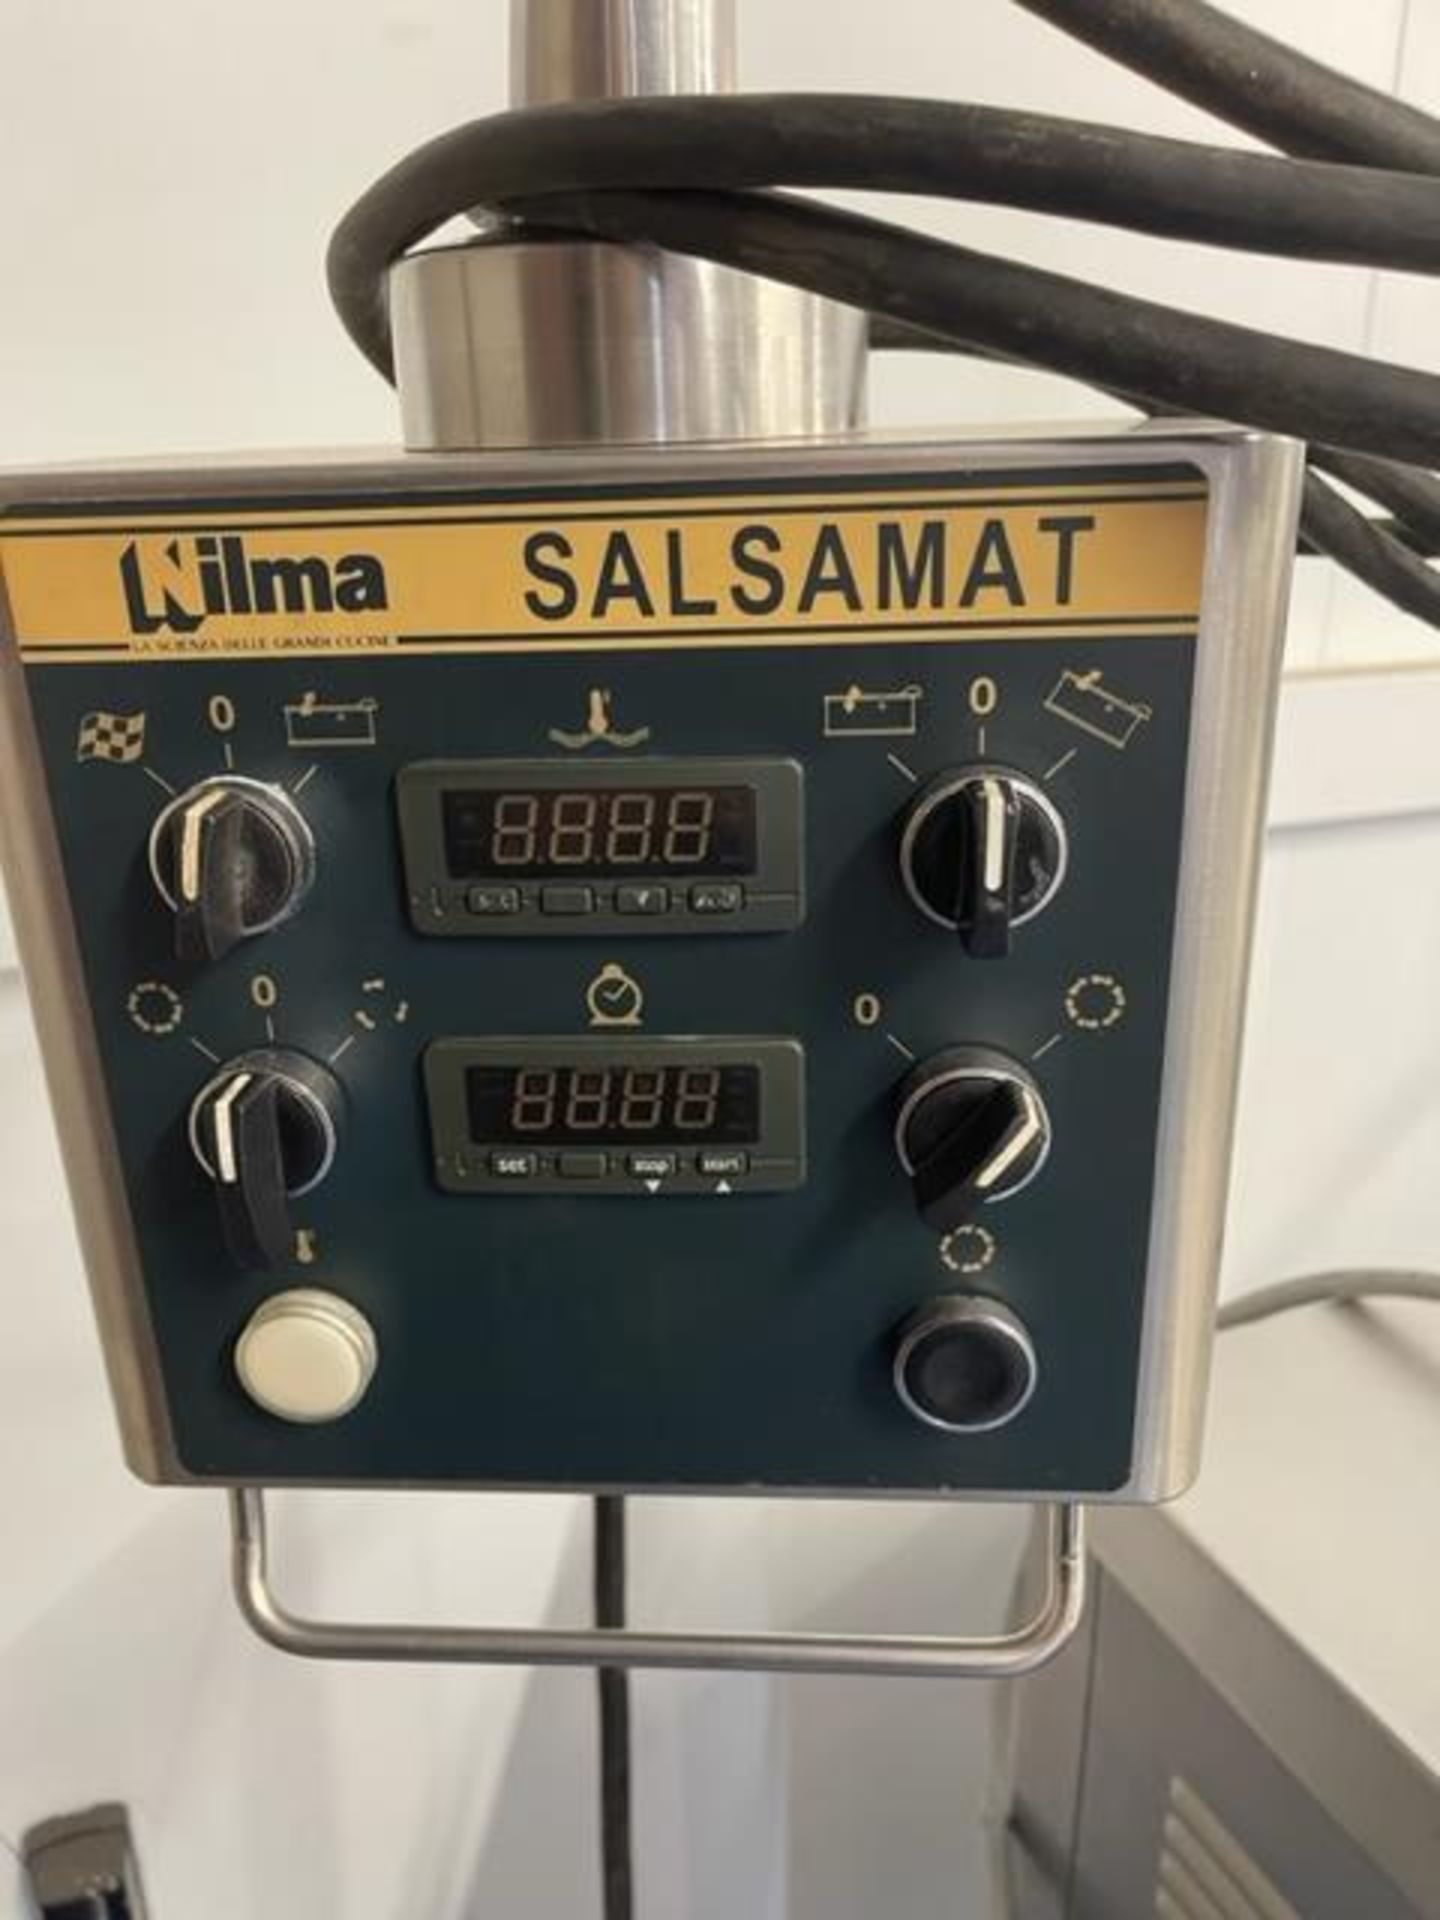 NILMA SALSAMAT TILTING BRAISING PAN. - Image 7 of 7